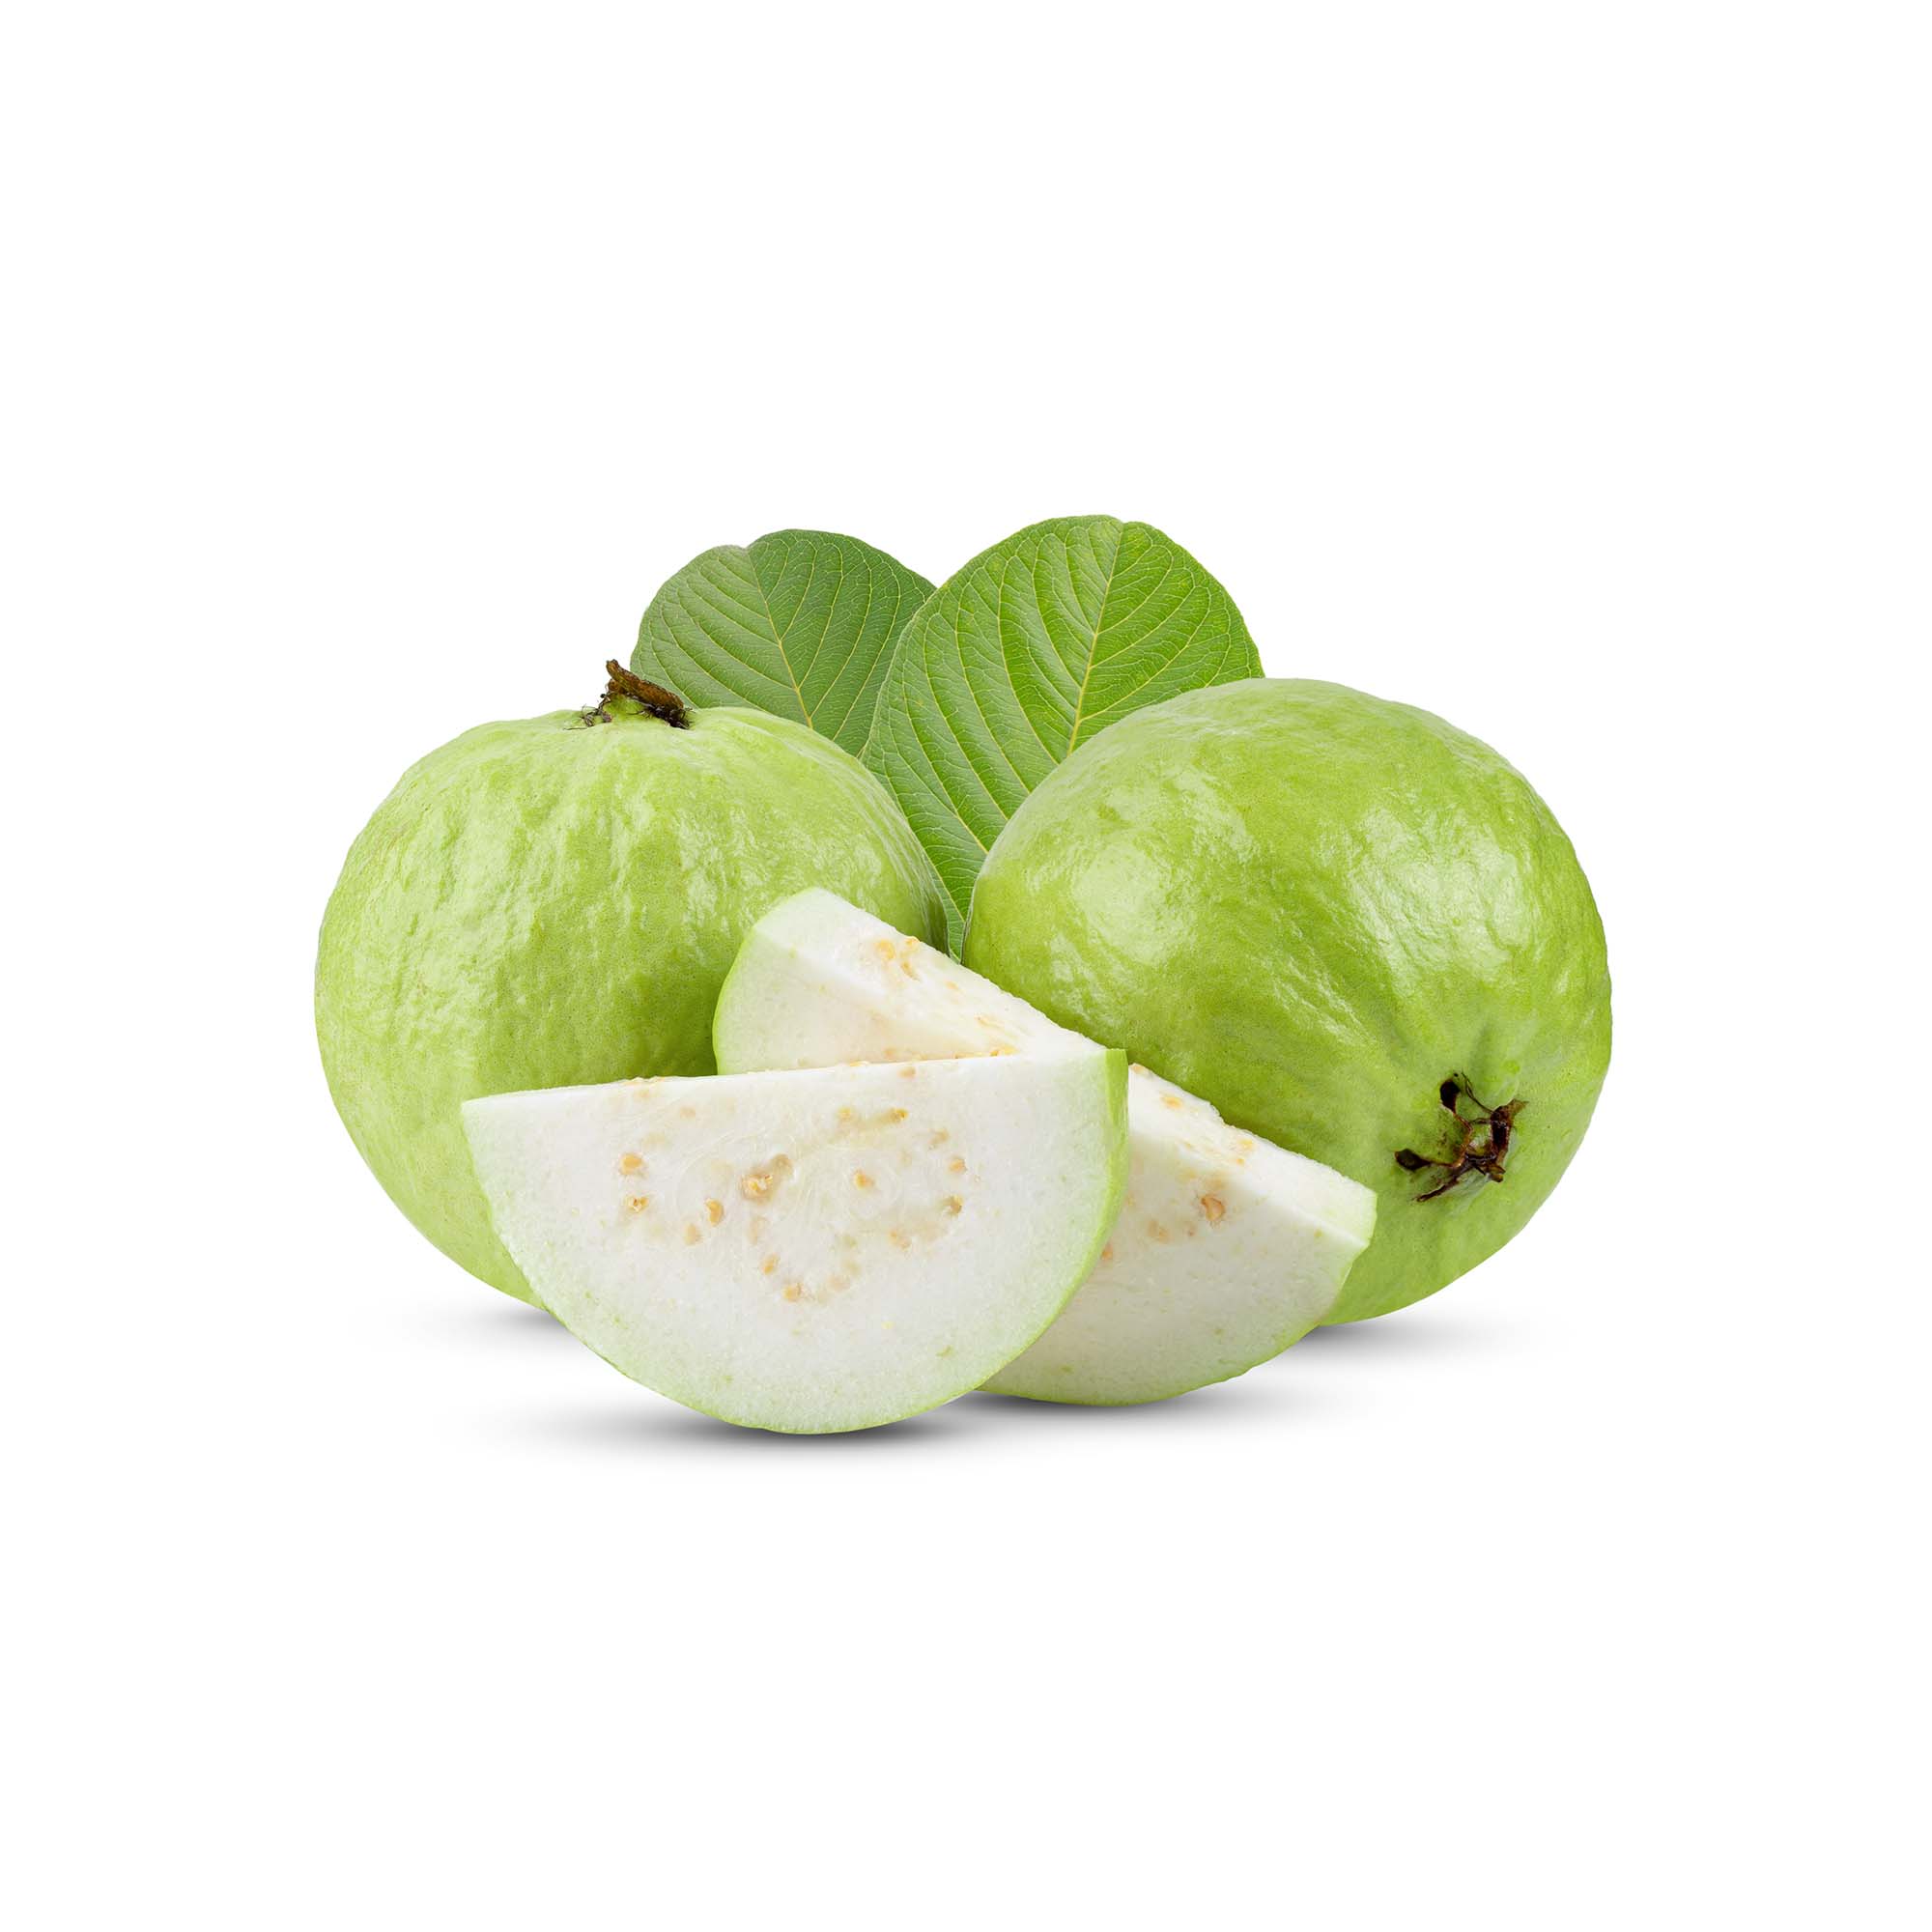 Guava - white flesh | Exotic Fruits - Rare & Tropical Exotic Fruit Shop UK